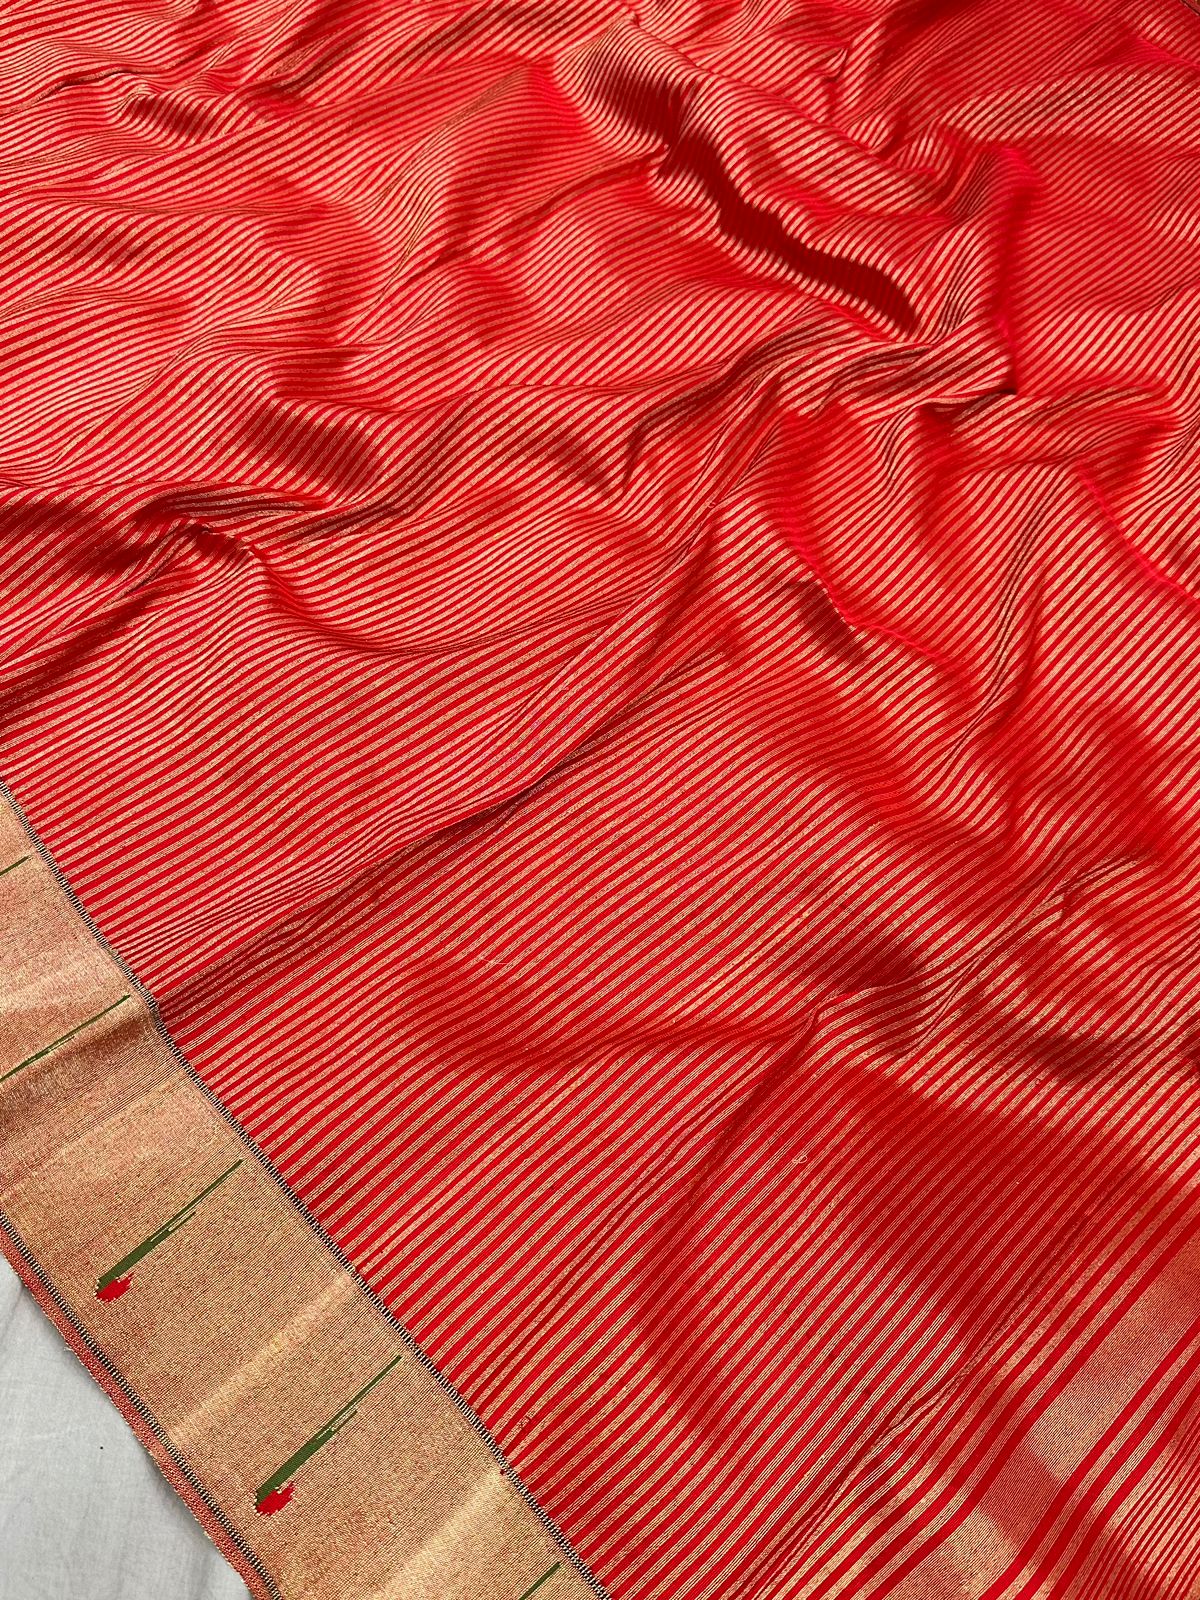 Orvashi handloom paithani saree